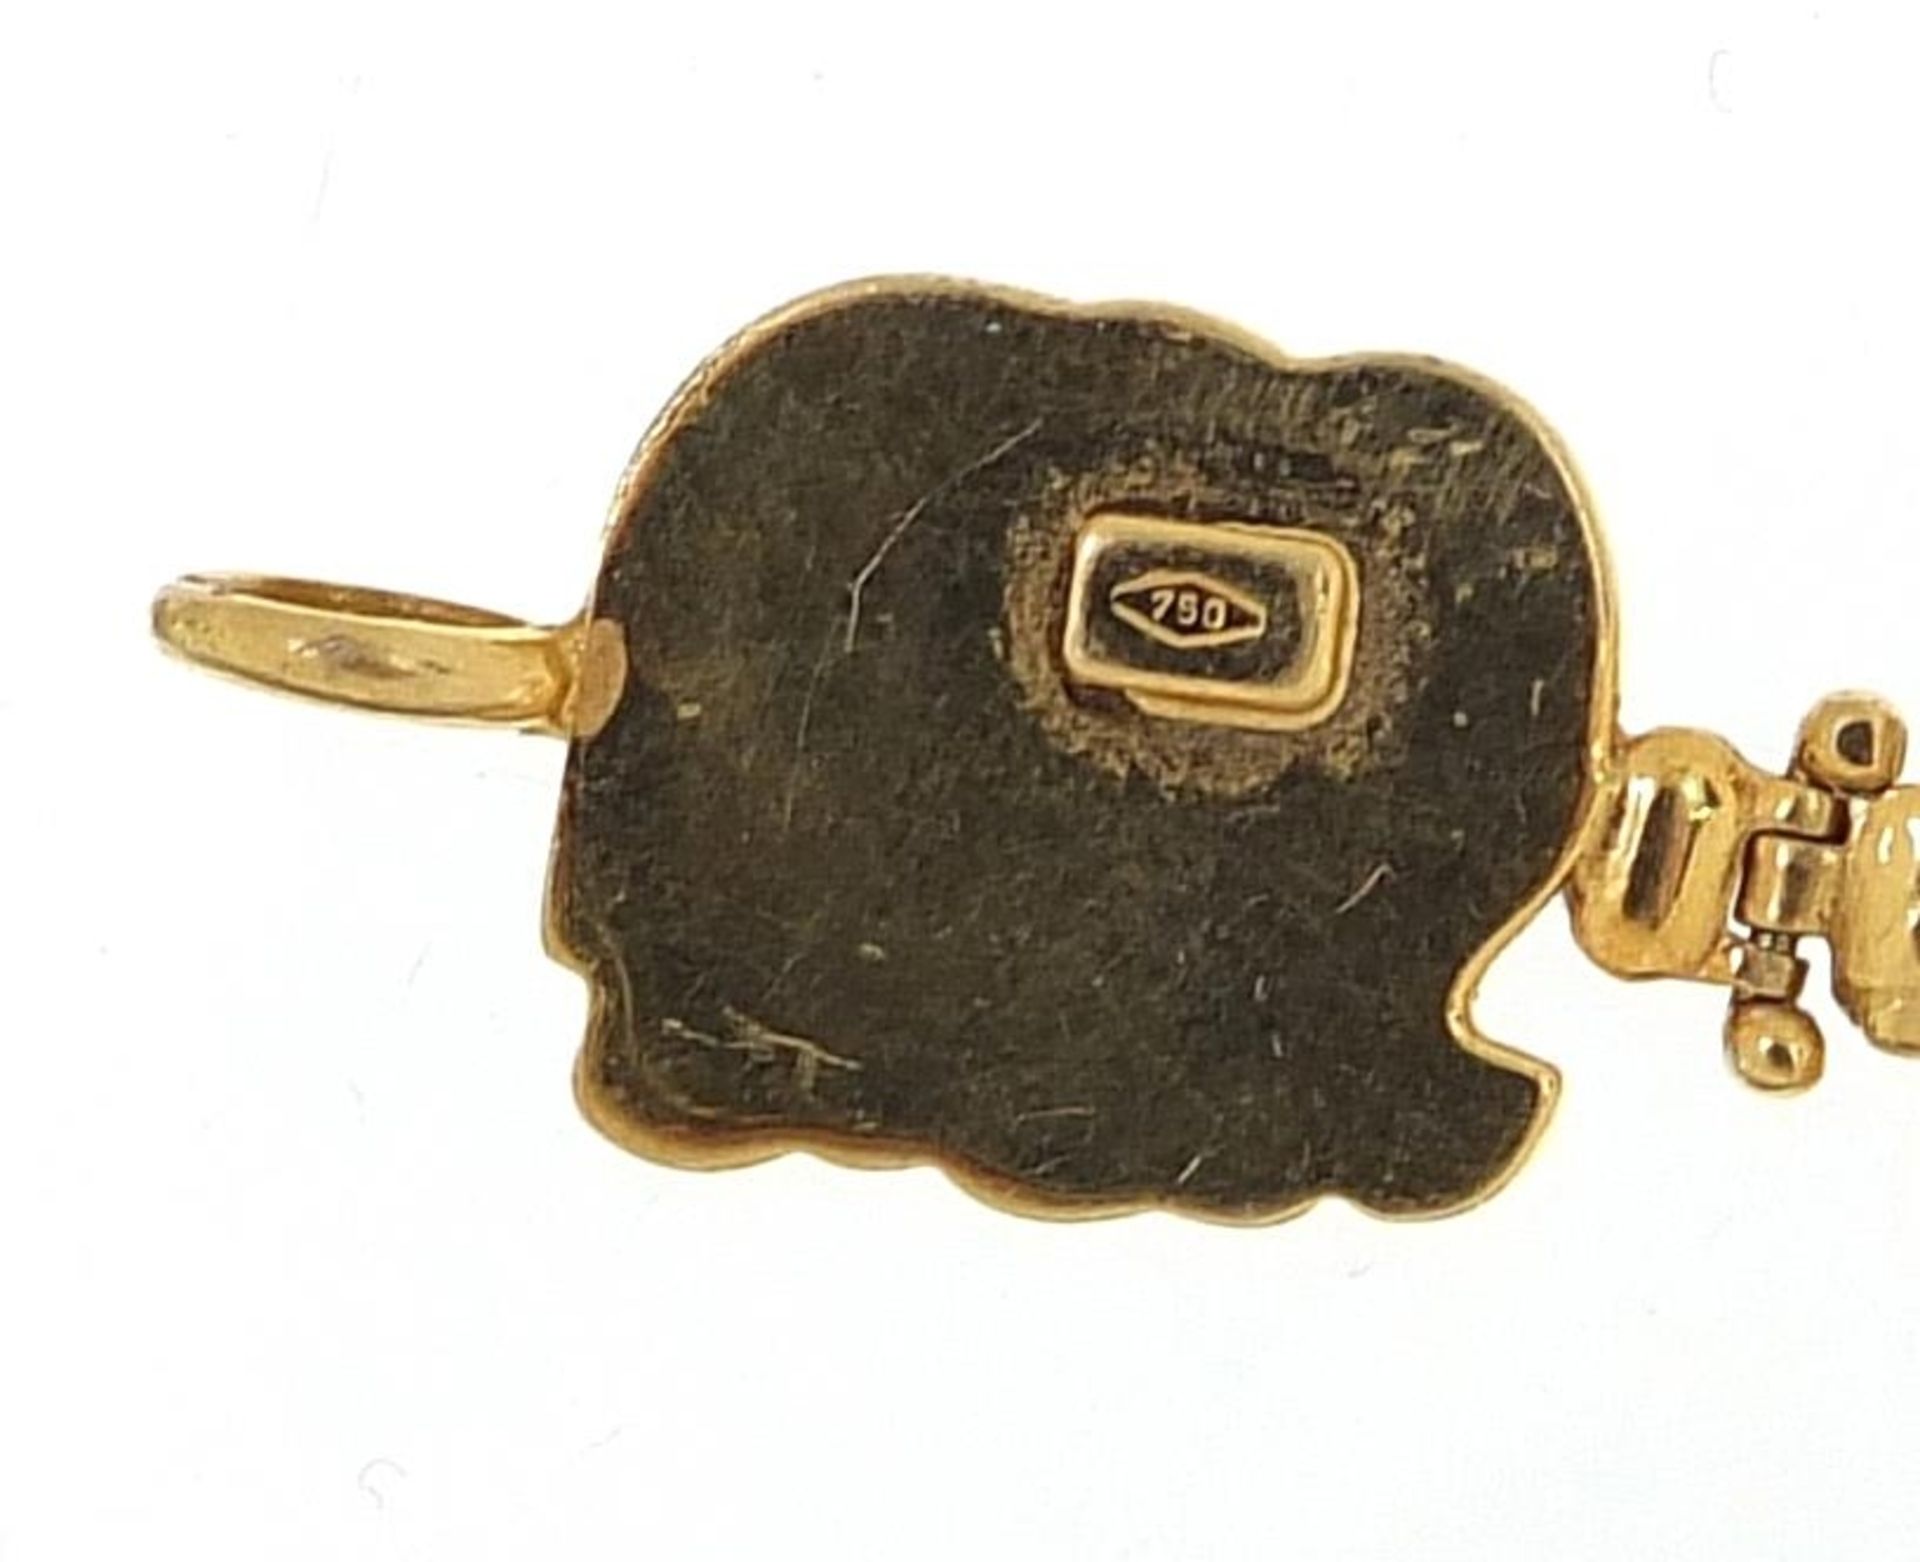 18ct gold elephant design bracelet, 18cm in length, 20.2g - Image 4 of 6